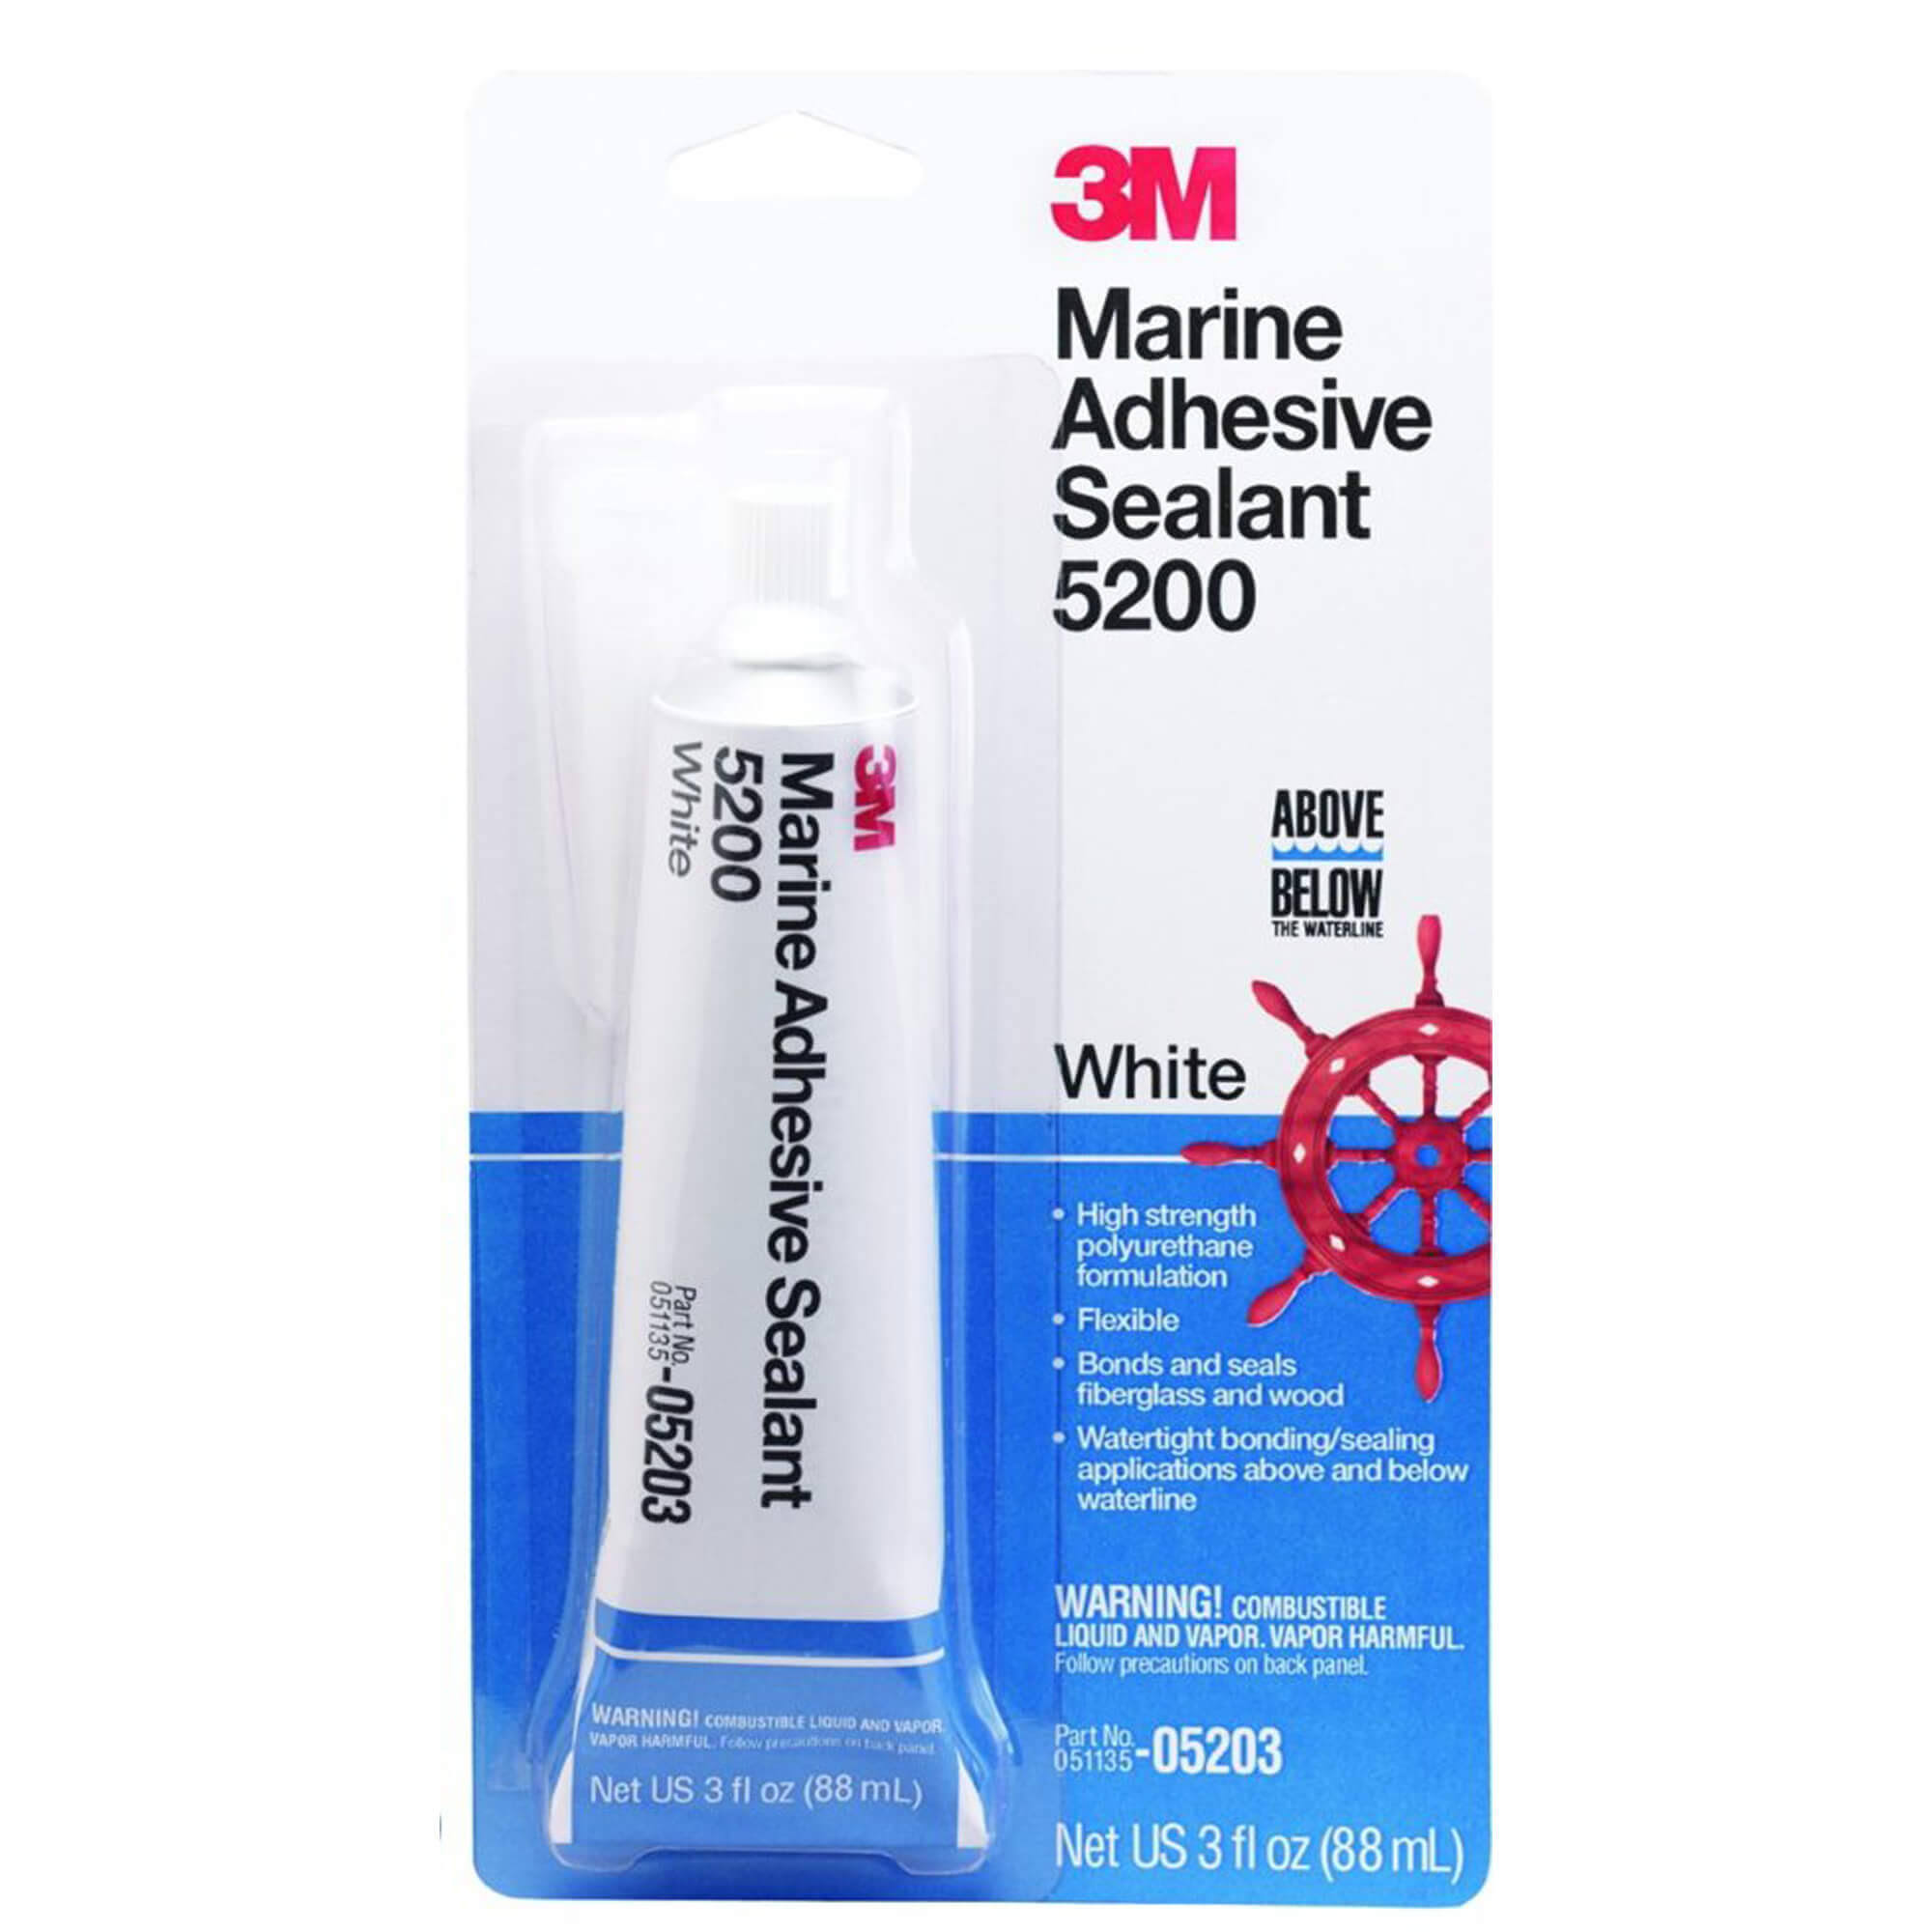 3M Marine 5200 Adhesive Sealant - White, 1oz